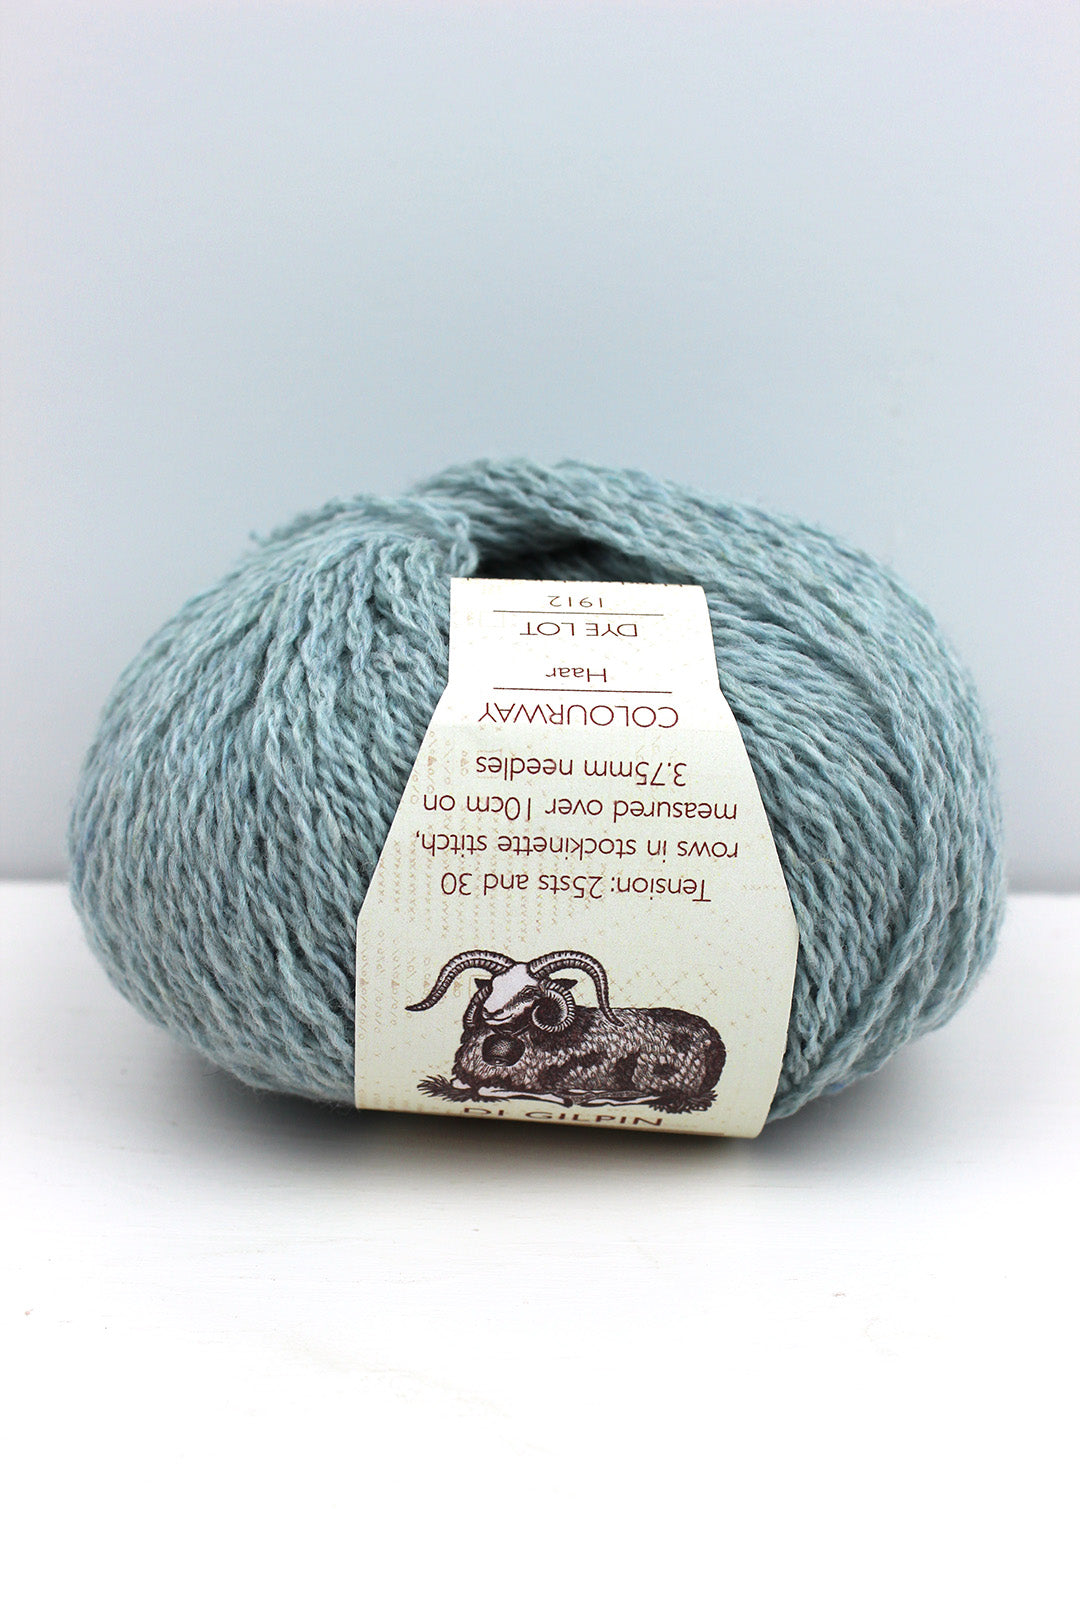 Di Gilpin yarn in blue Haar colourway. Scottish Textiles Showcase